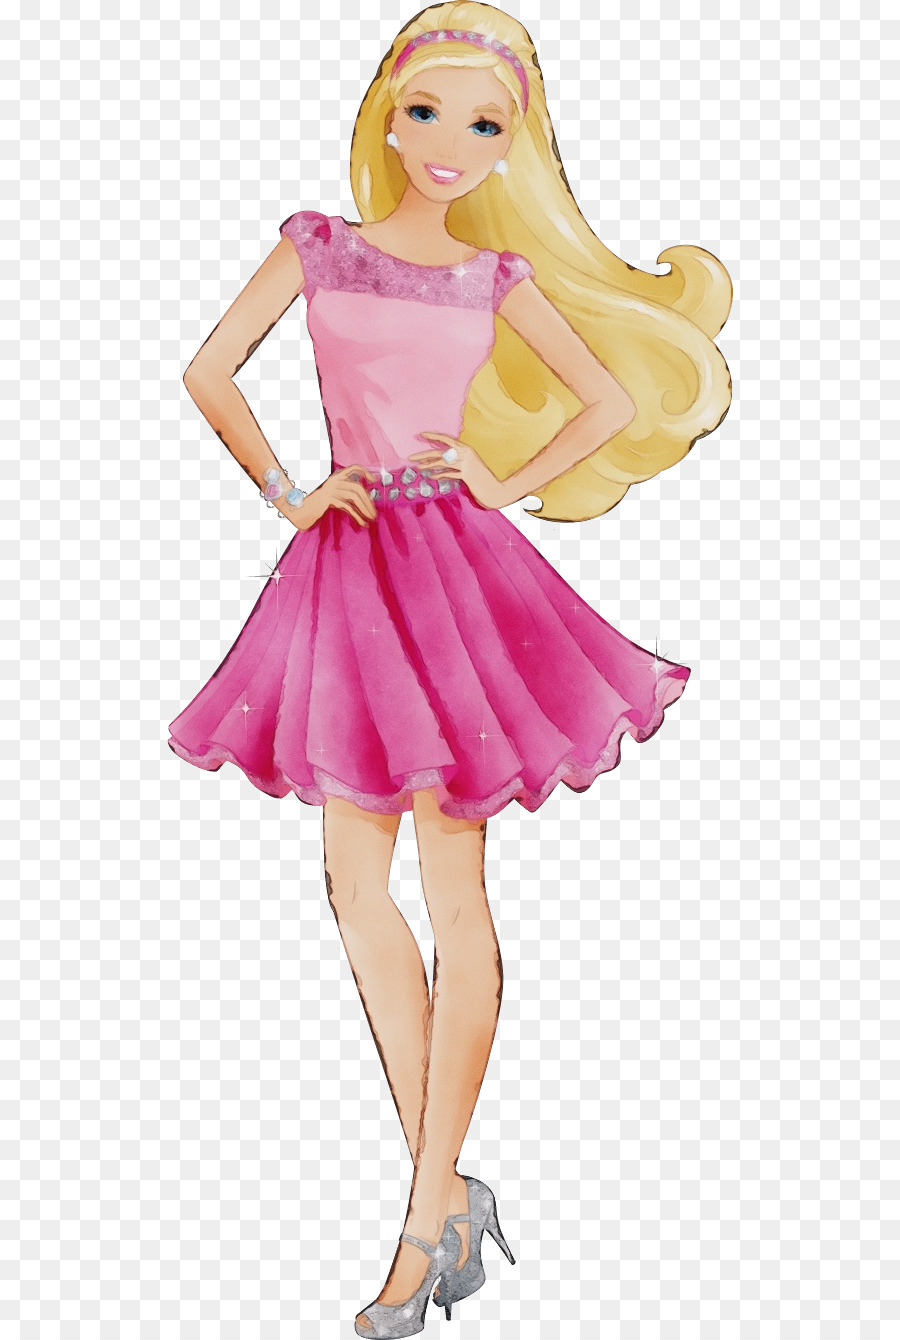 Portable Network Graphics Barbie Clip art Image Doll -  png download - 566*1340 - Free Transparent Barbie png Download.